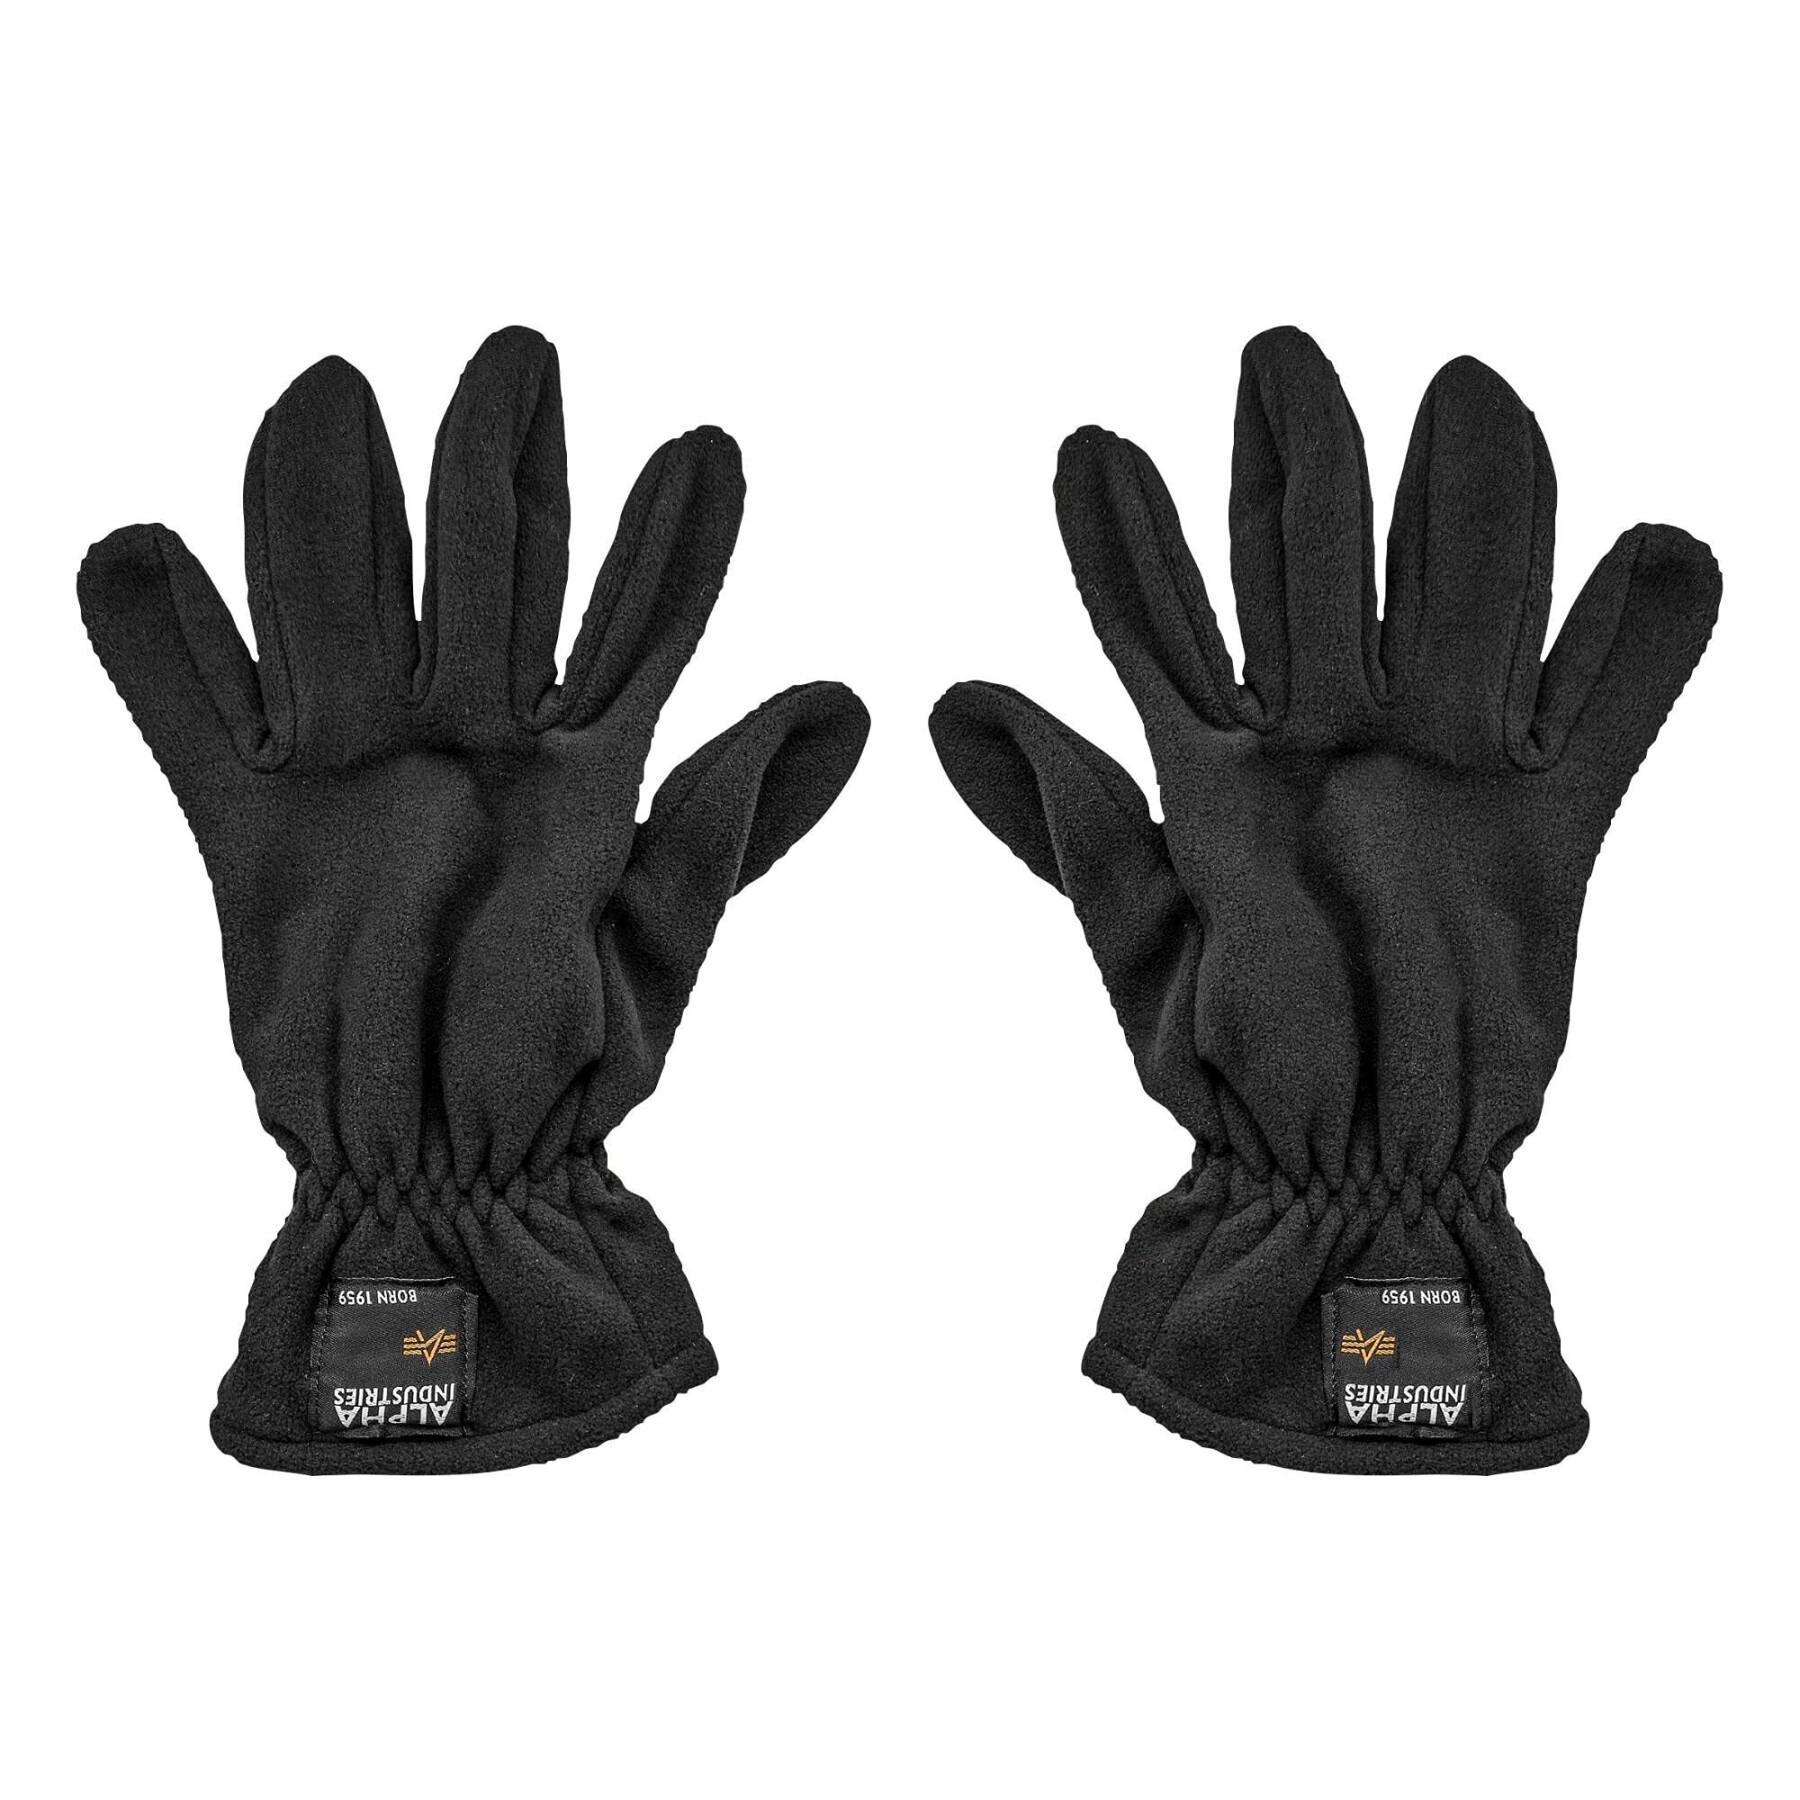 Gloves Alpha Industries Label Fleece